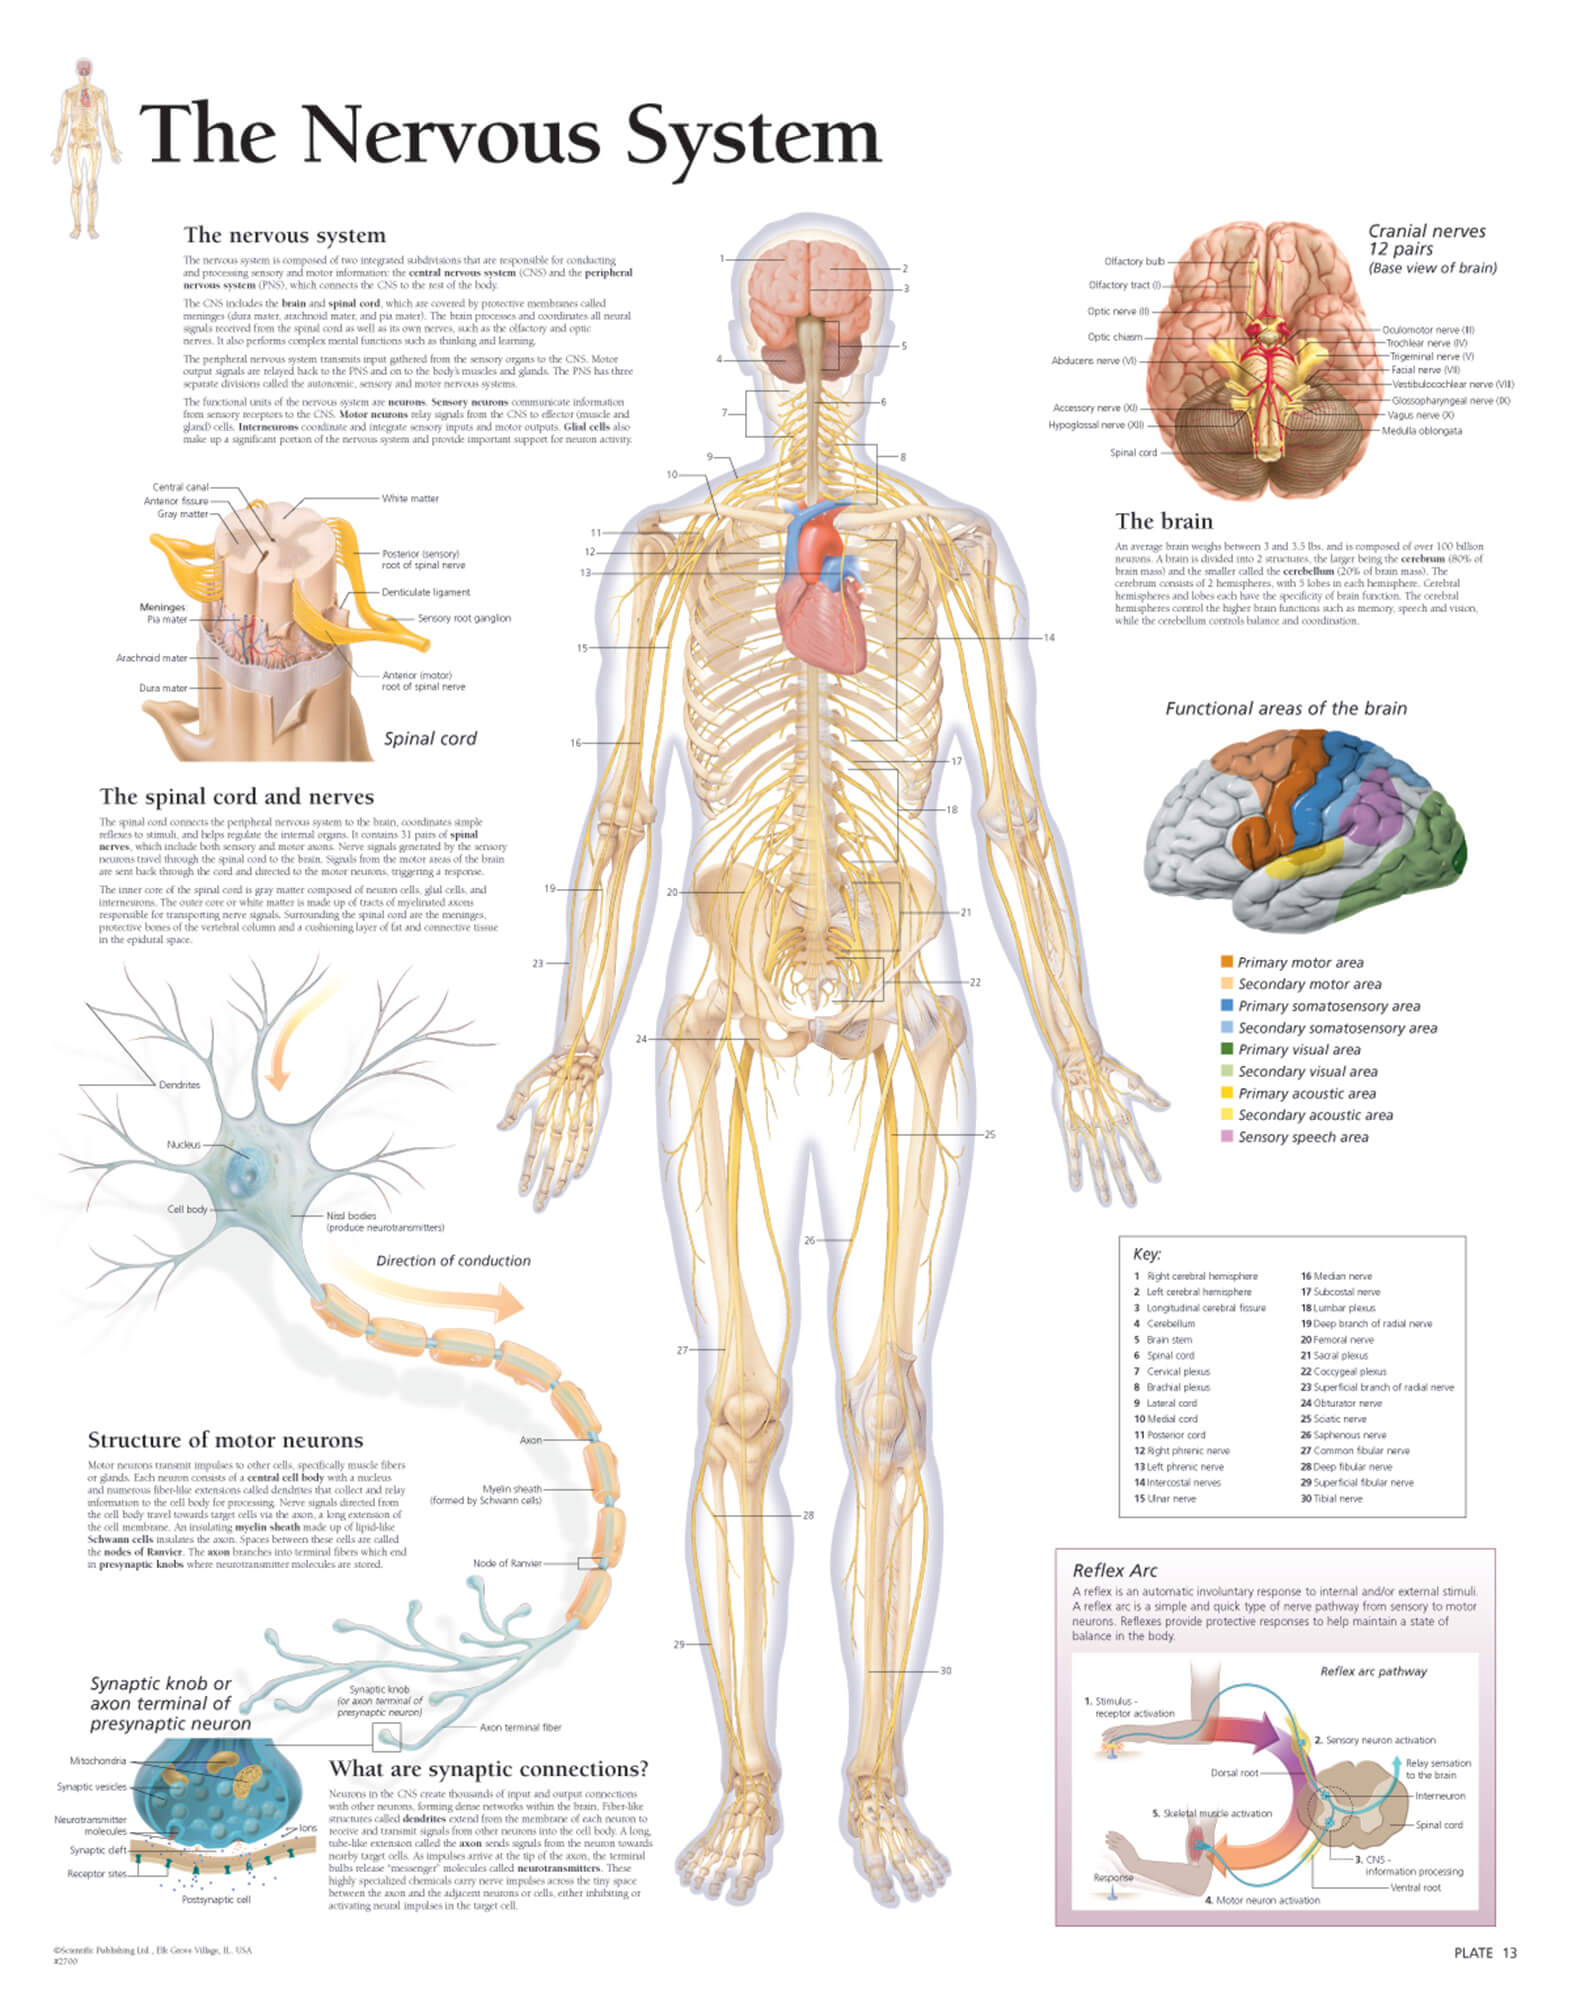 spinal nerve chart anatomy